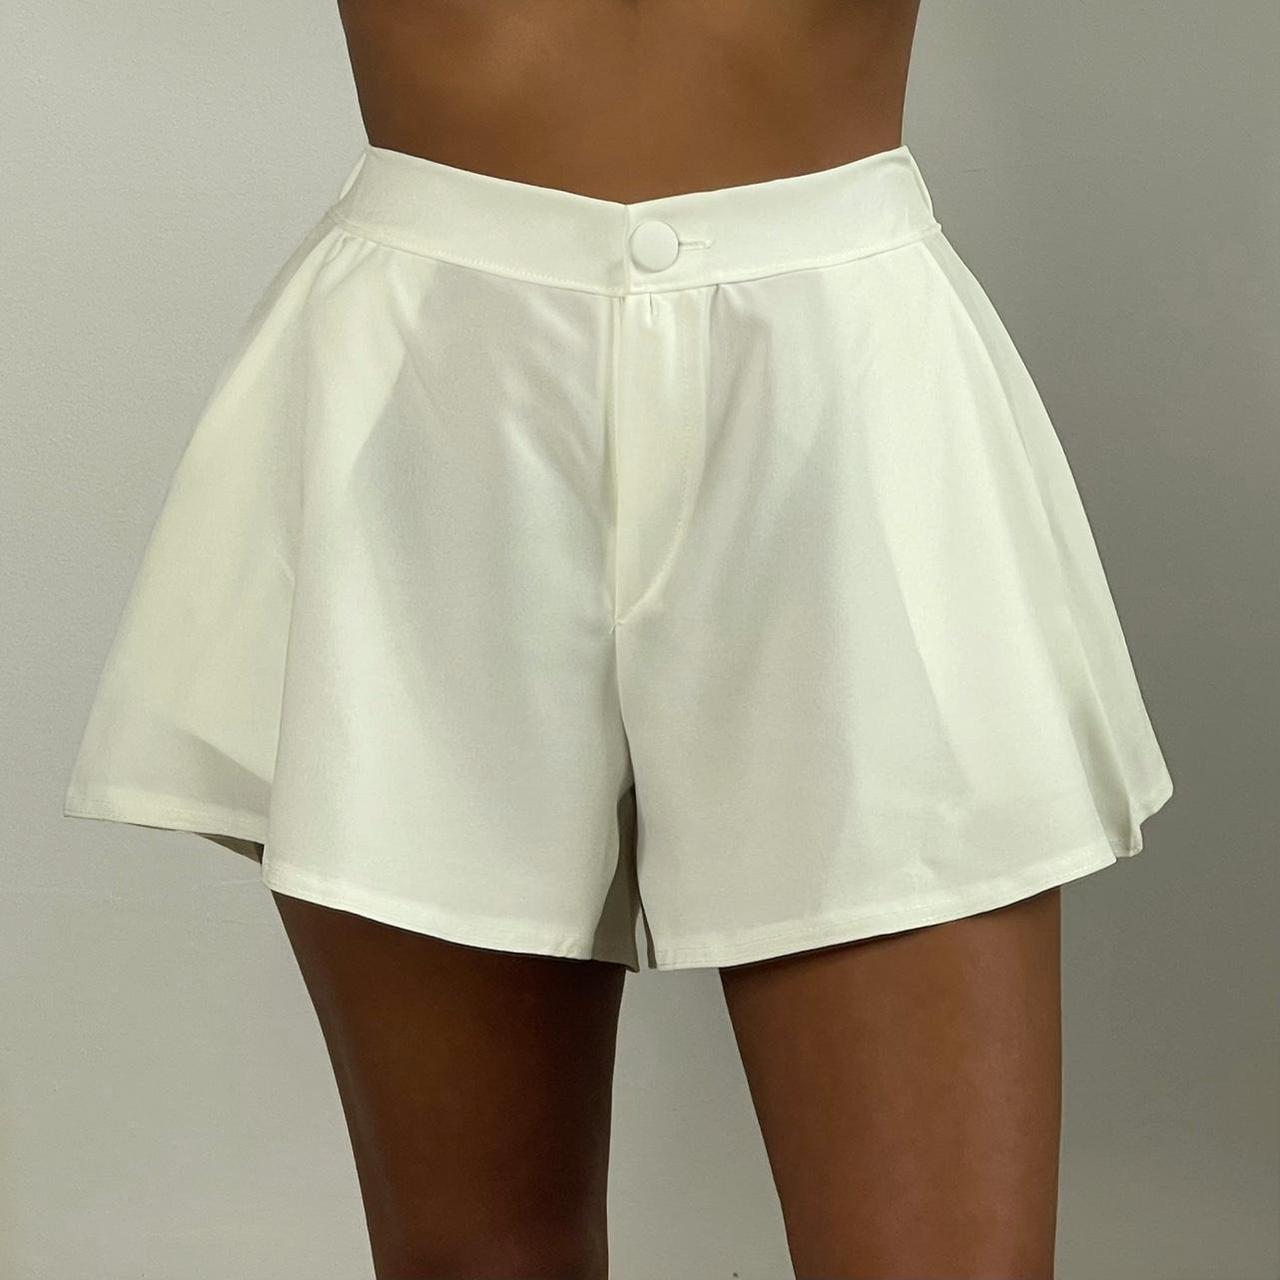 White Flared Shorts High Waisted Shorts Tailored Depop 